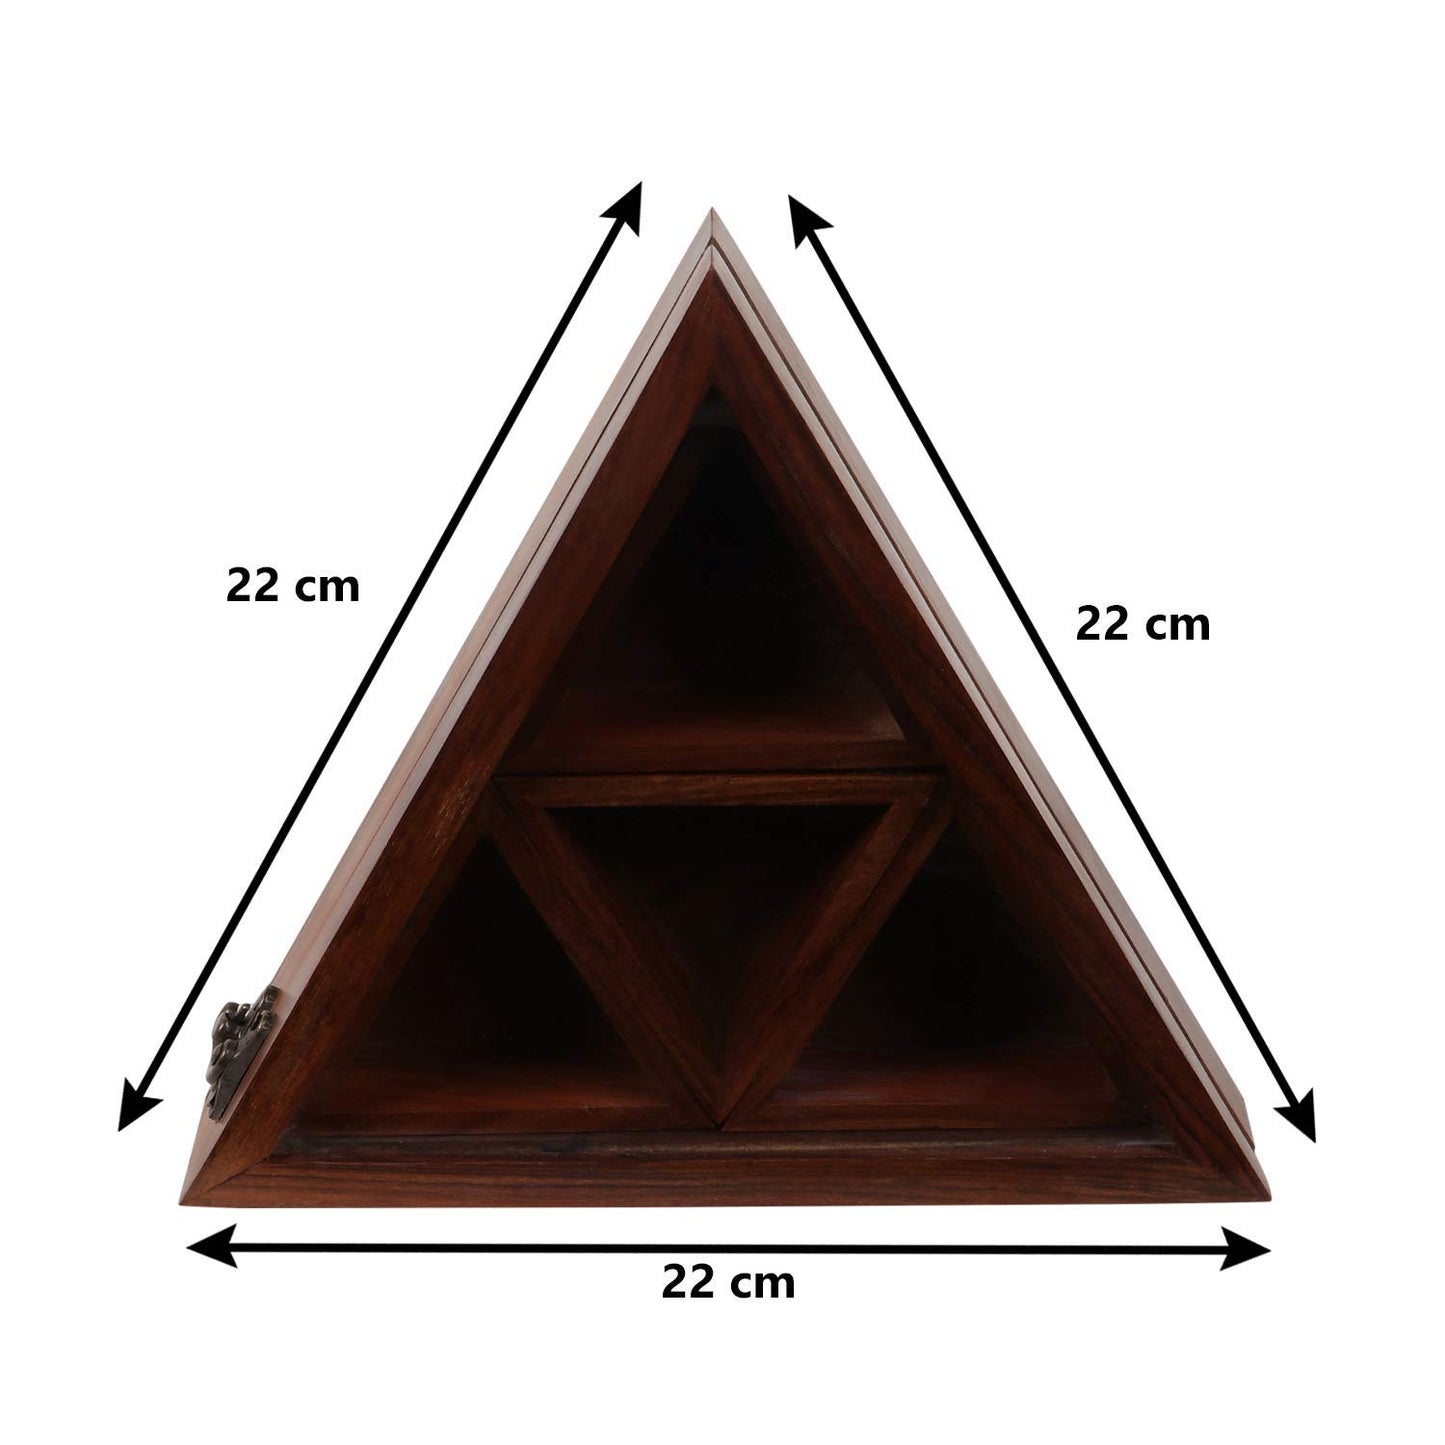 Spice box – Triangular with a Spoon